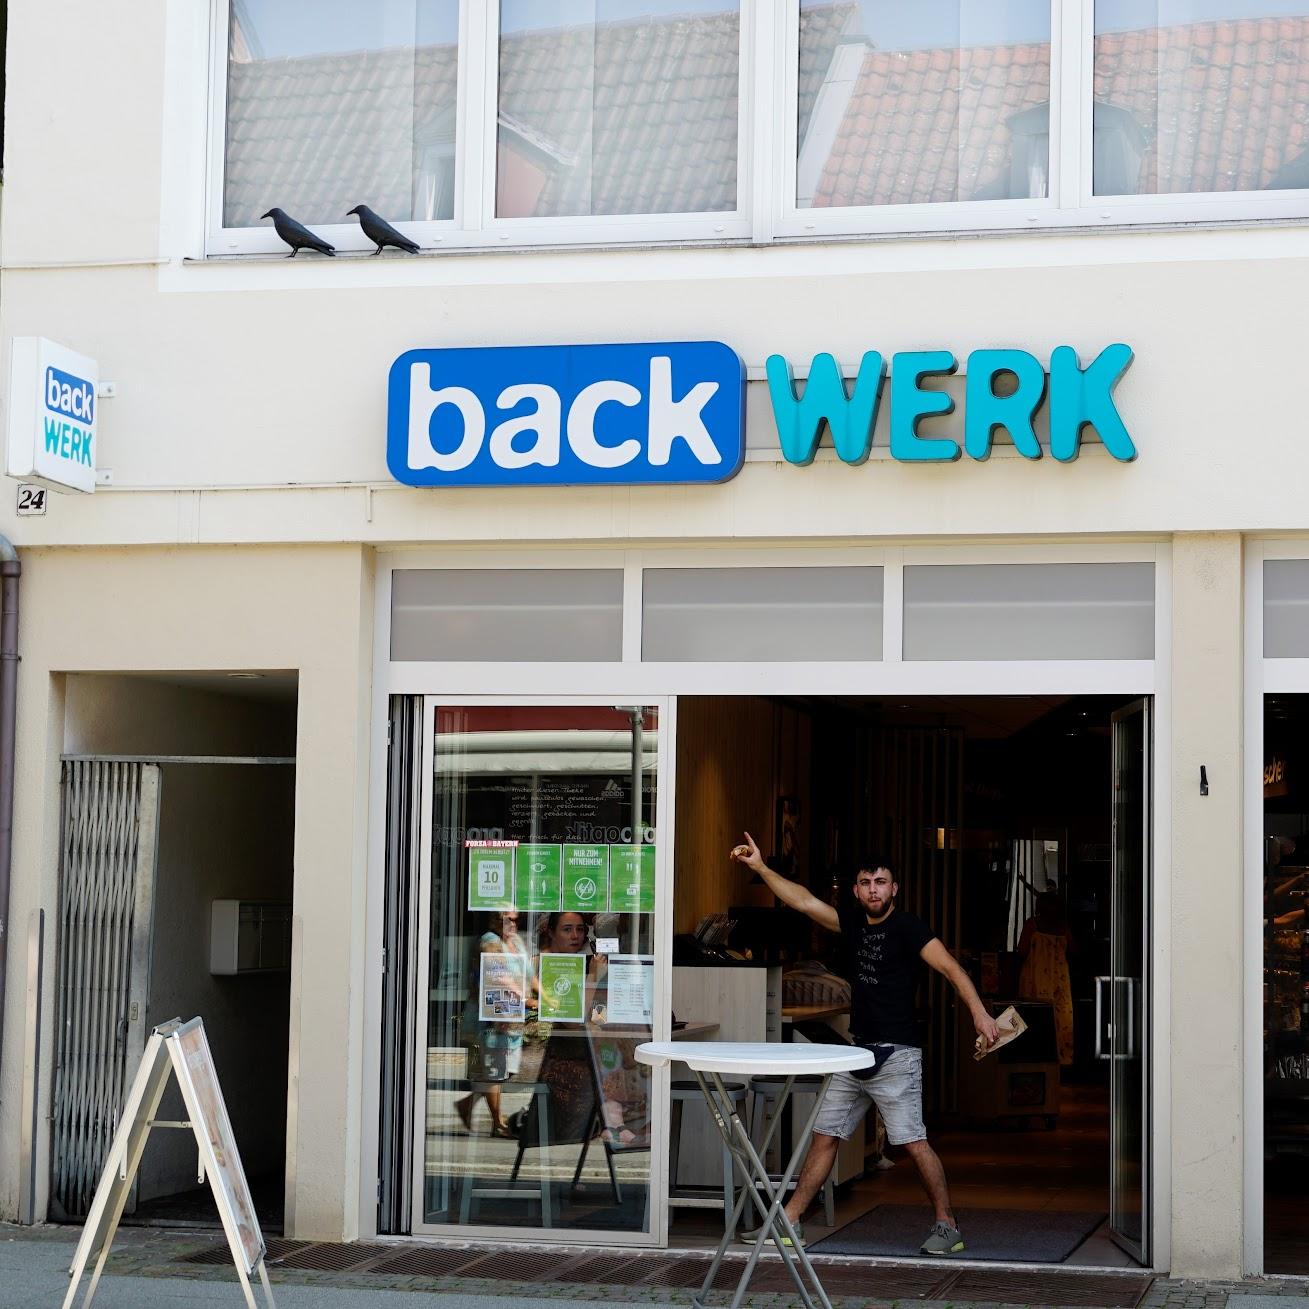 Restaurant "BackWerk" in Offenburg